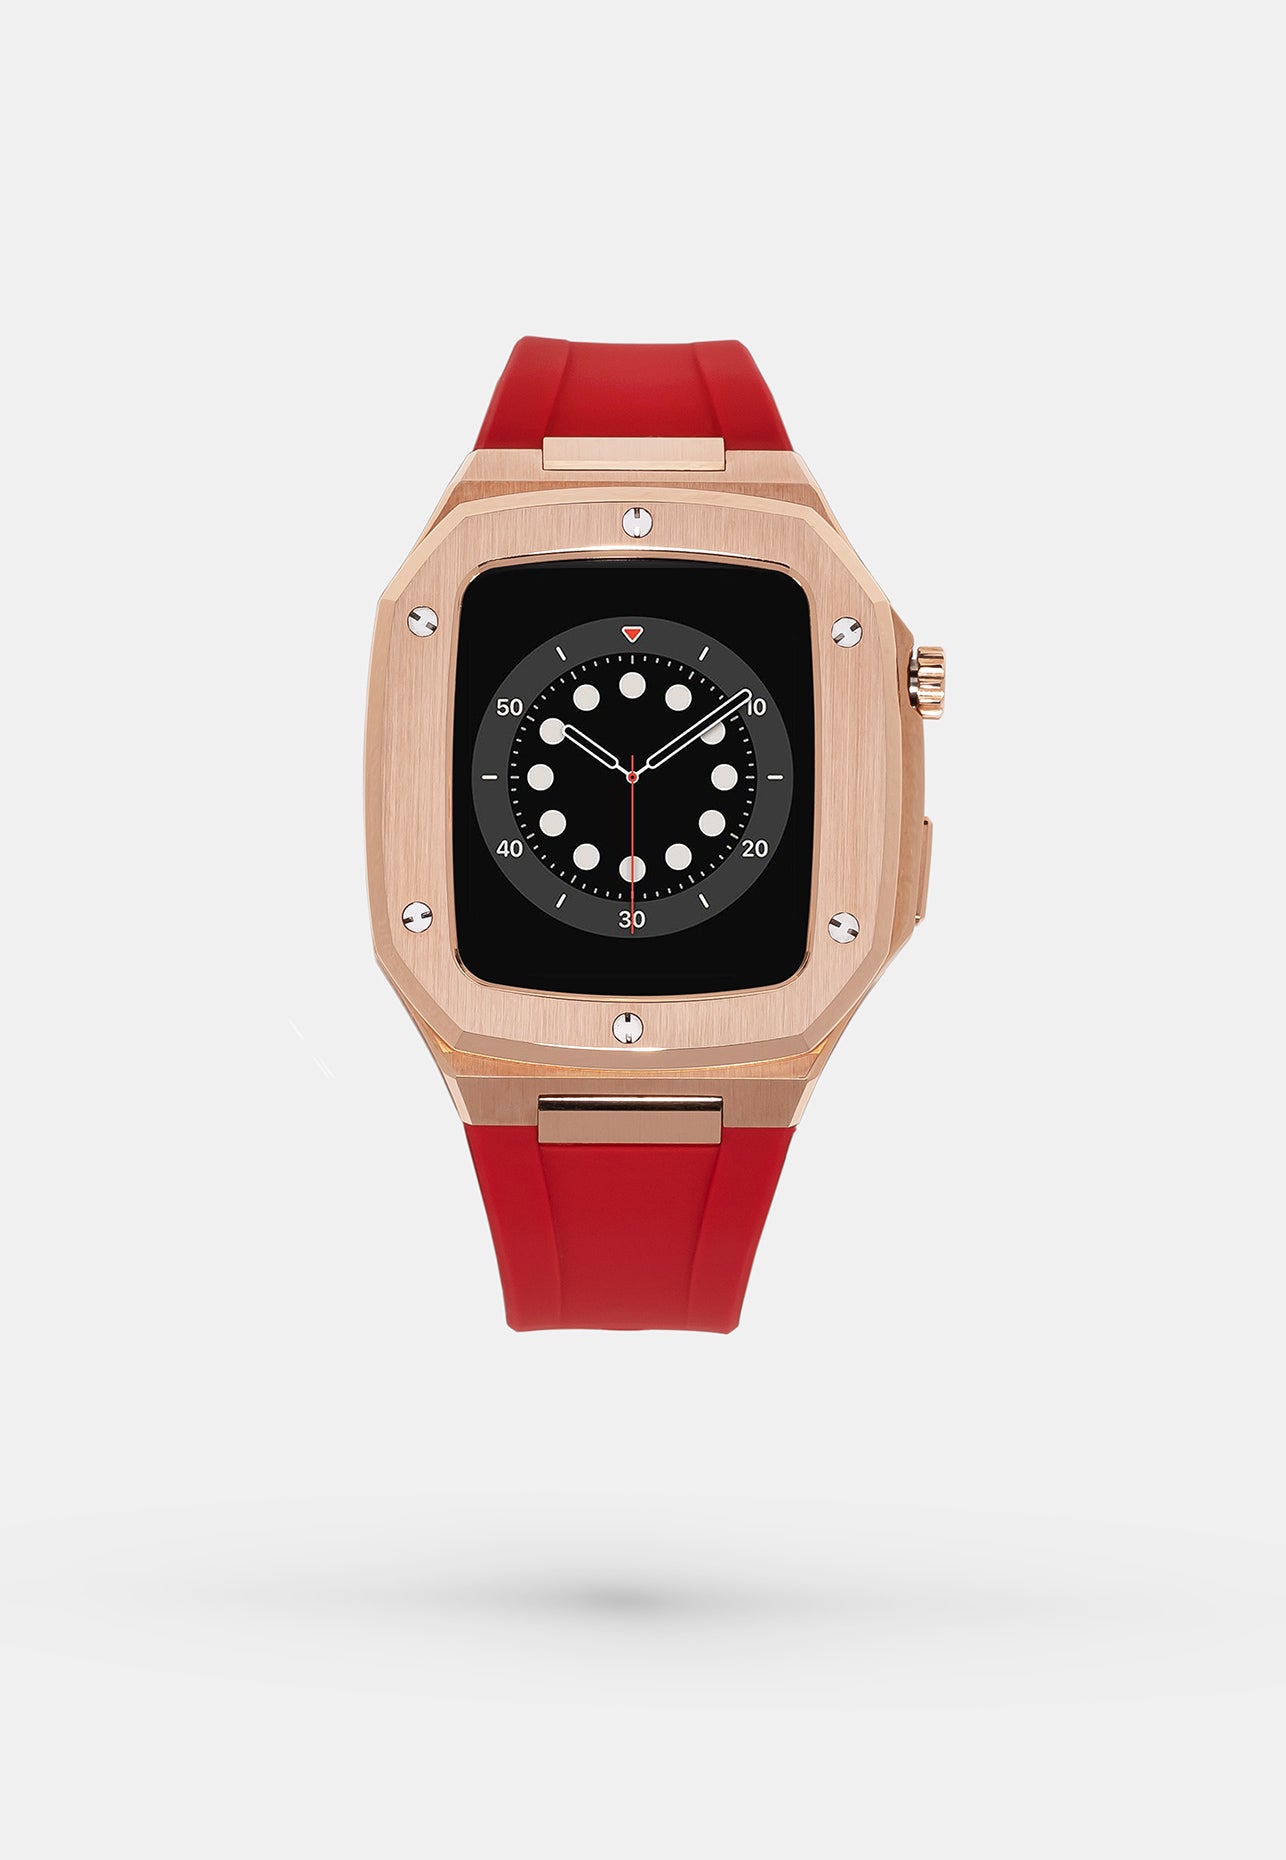 Everose Sport - Accessoire Apple Watch - Coque Or Rose et bracelet Silicone rouge Appel Watch 44mm 